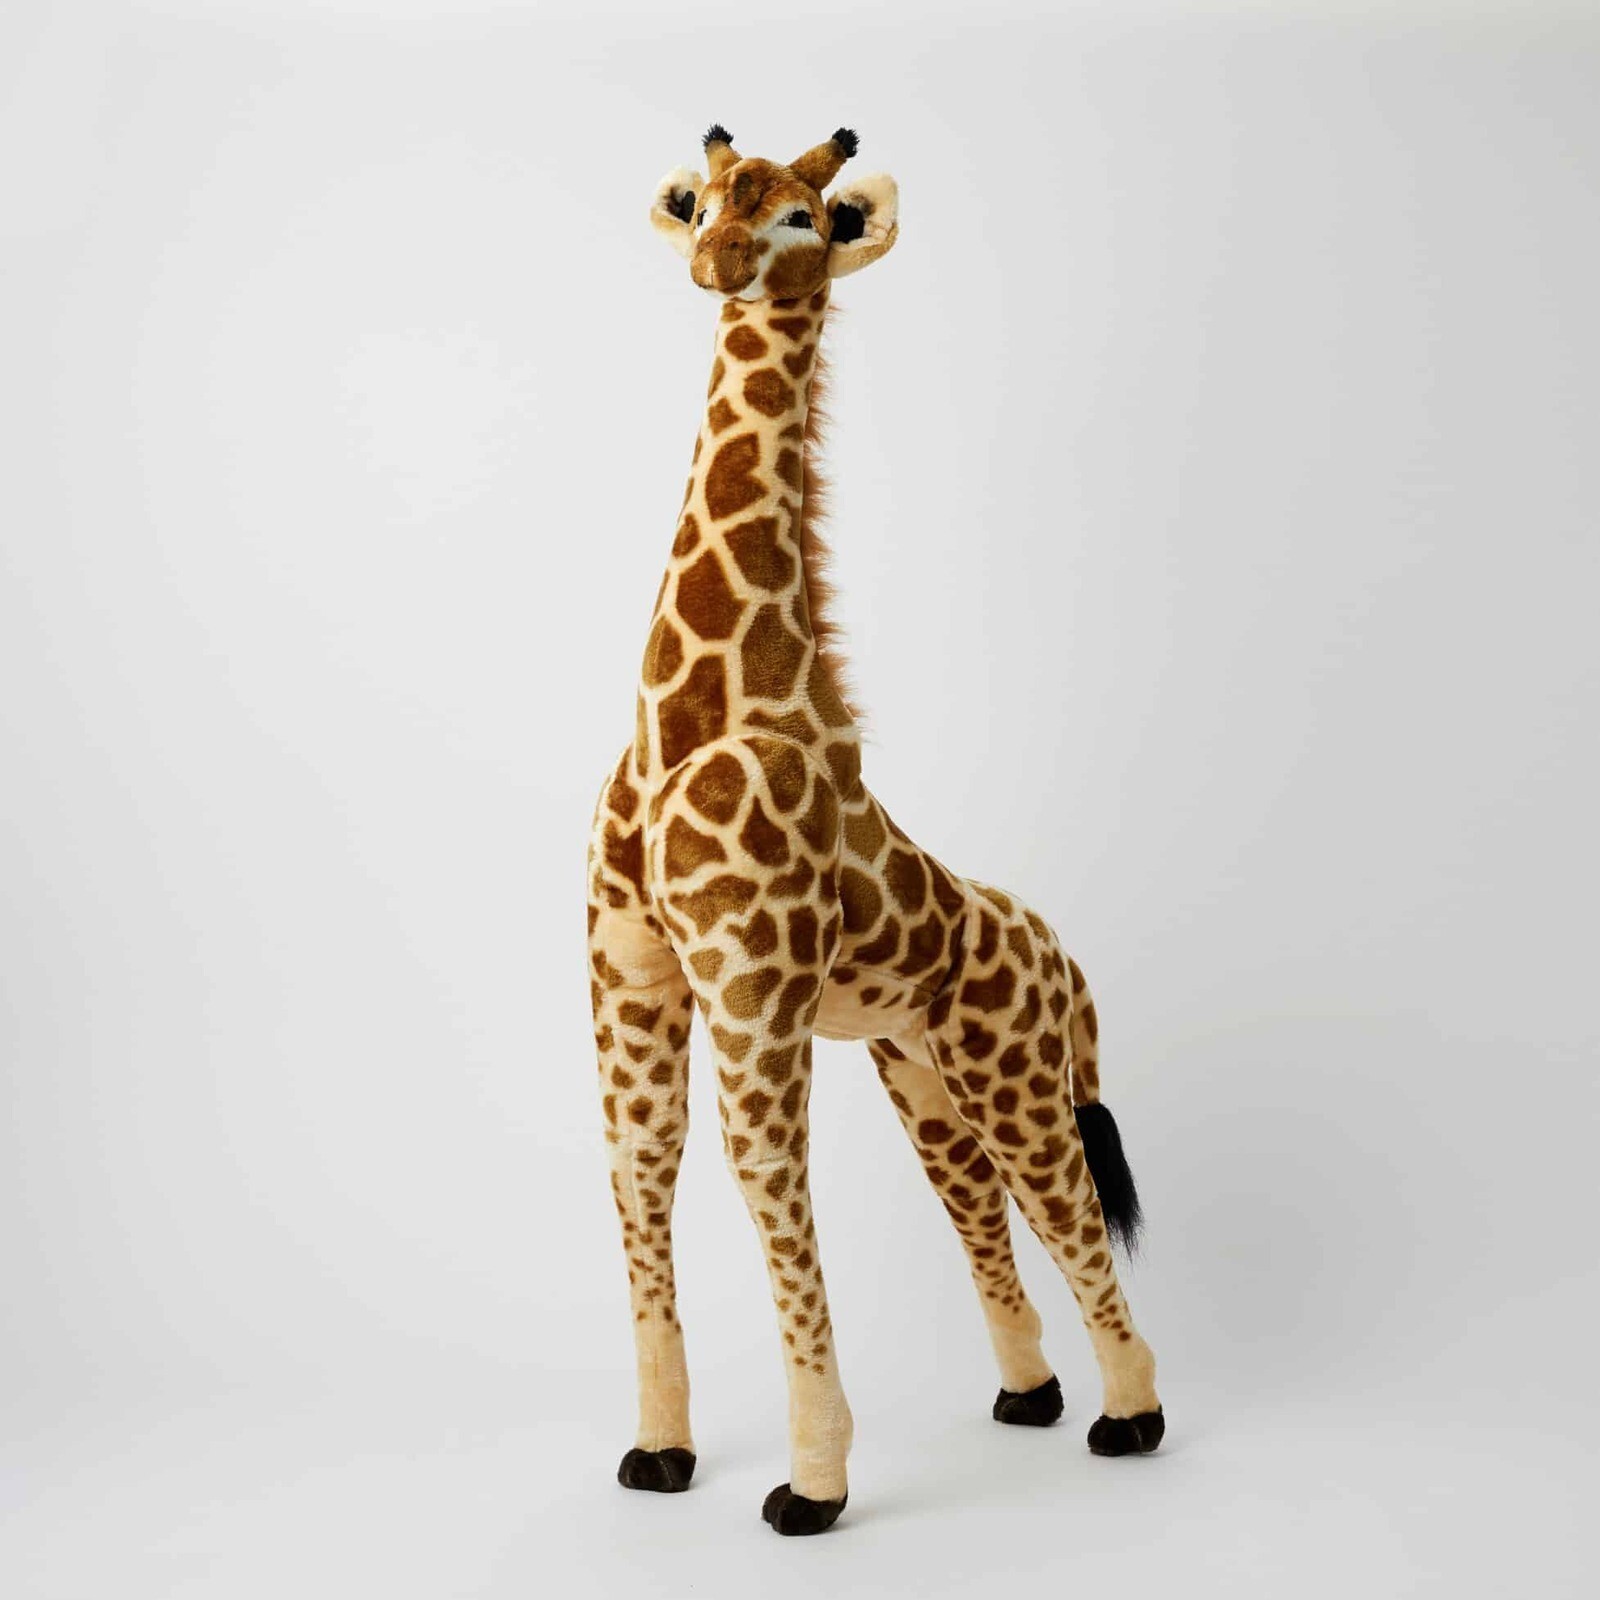 Giant Standing Giraffe